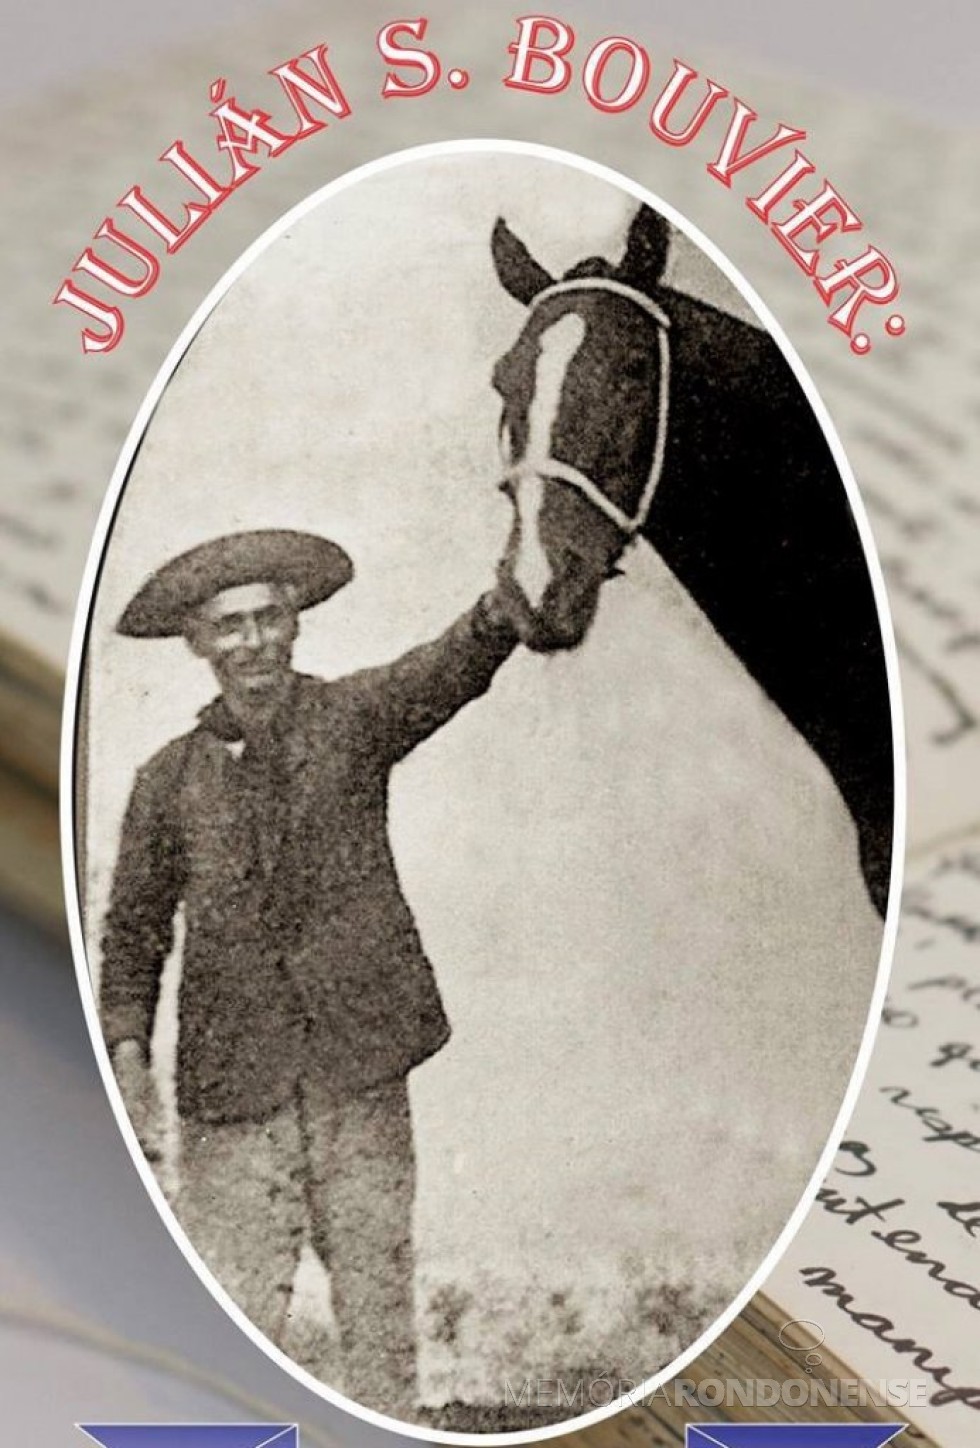 || Jornalista francês Julián S. Bouvier que passou a residir em Foz do Iguaçu, a partir de agosto de 1907.
Imagem: Acervo Julián S. Bouvier 25 años en el Paraguay/ Facebook - FOTO 2 - 